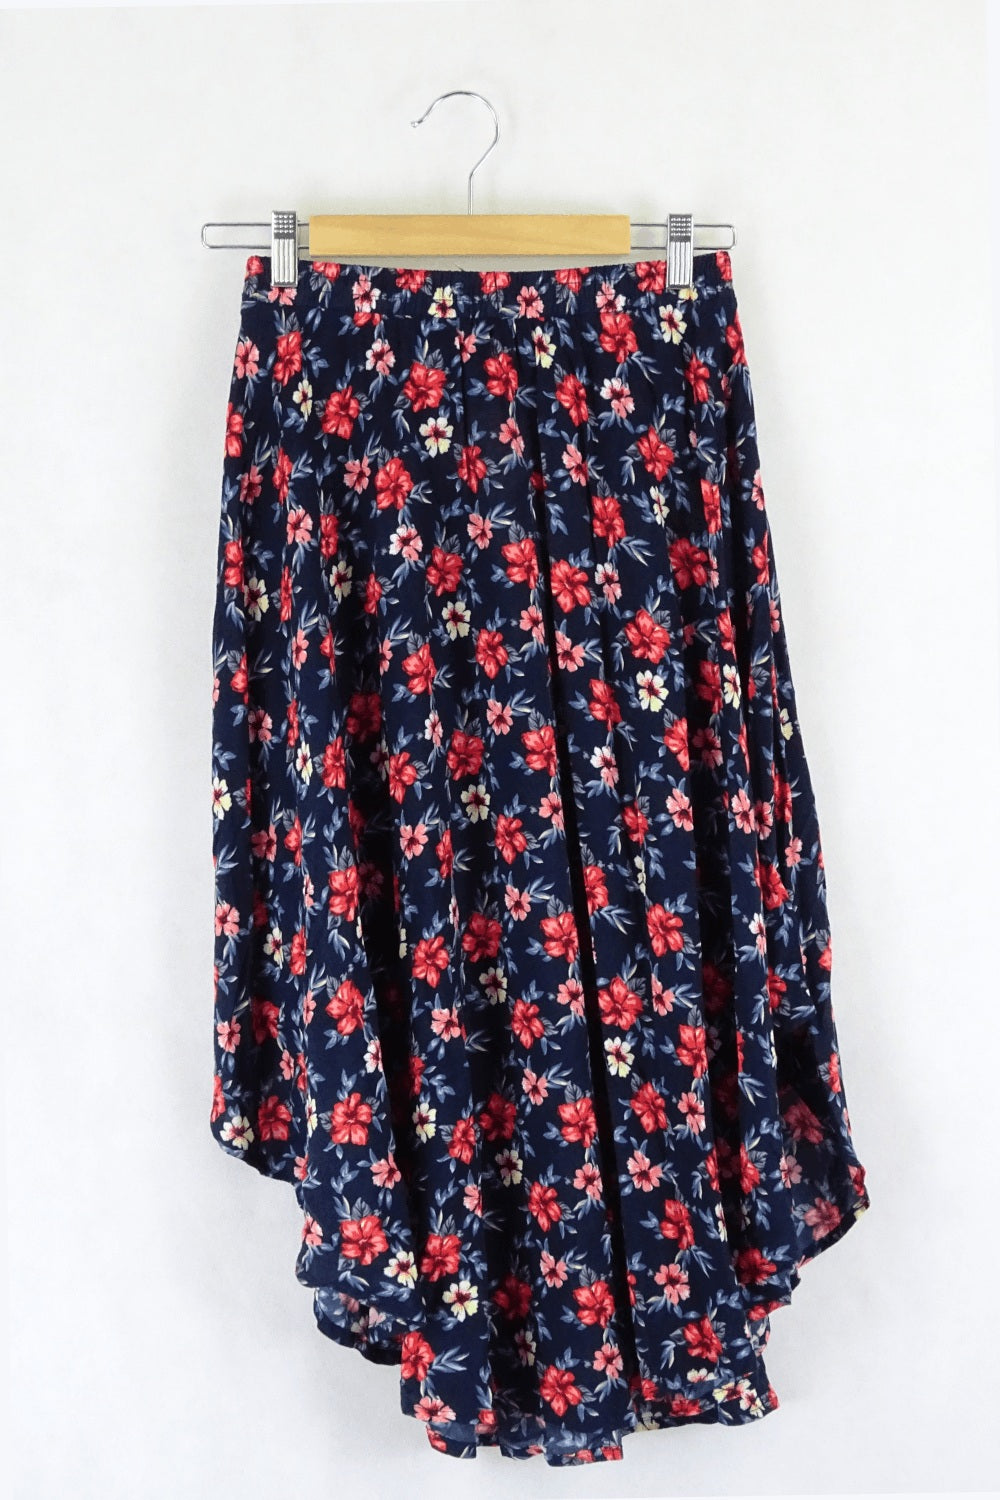 Hollister Printed Skirt S